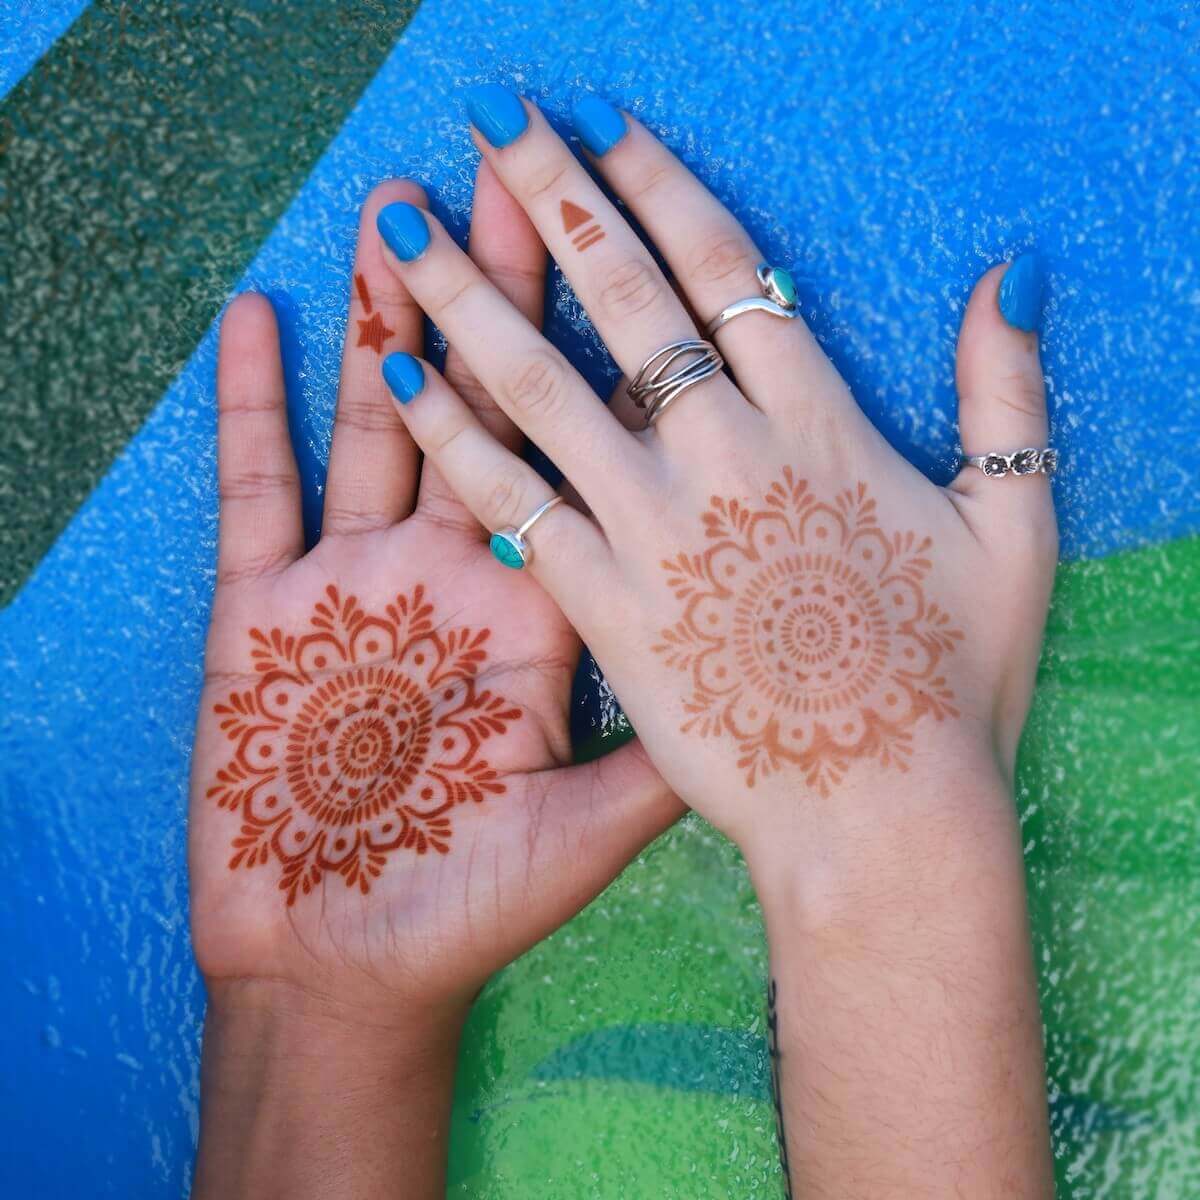 Haley - matching mandala henna designs on palms